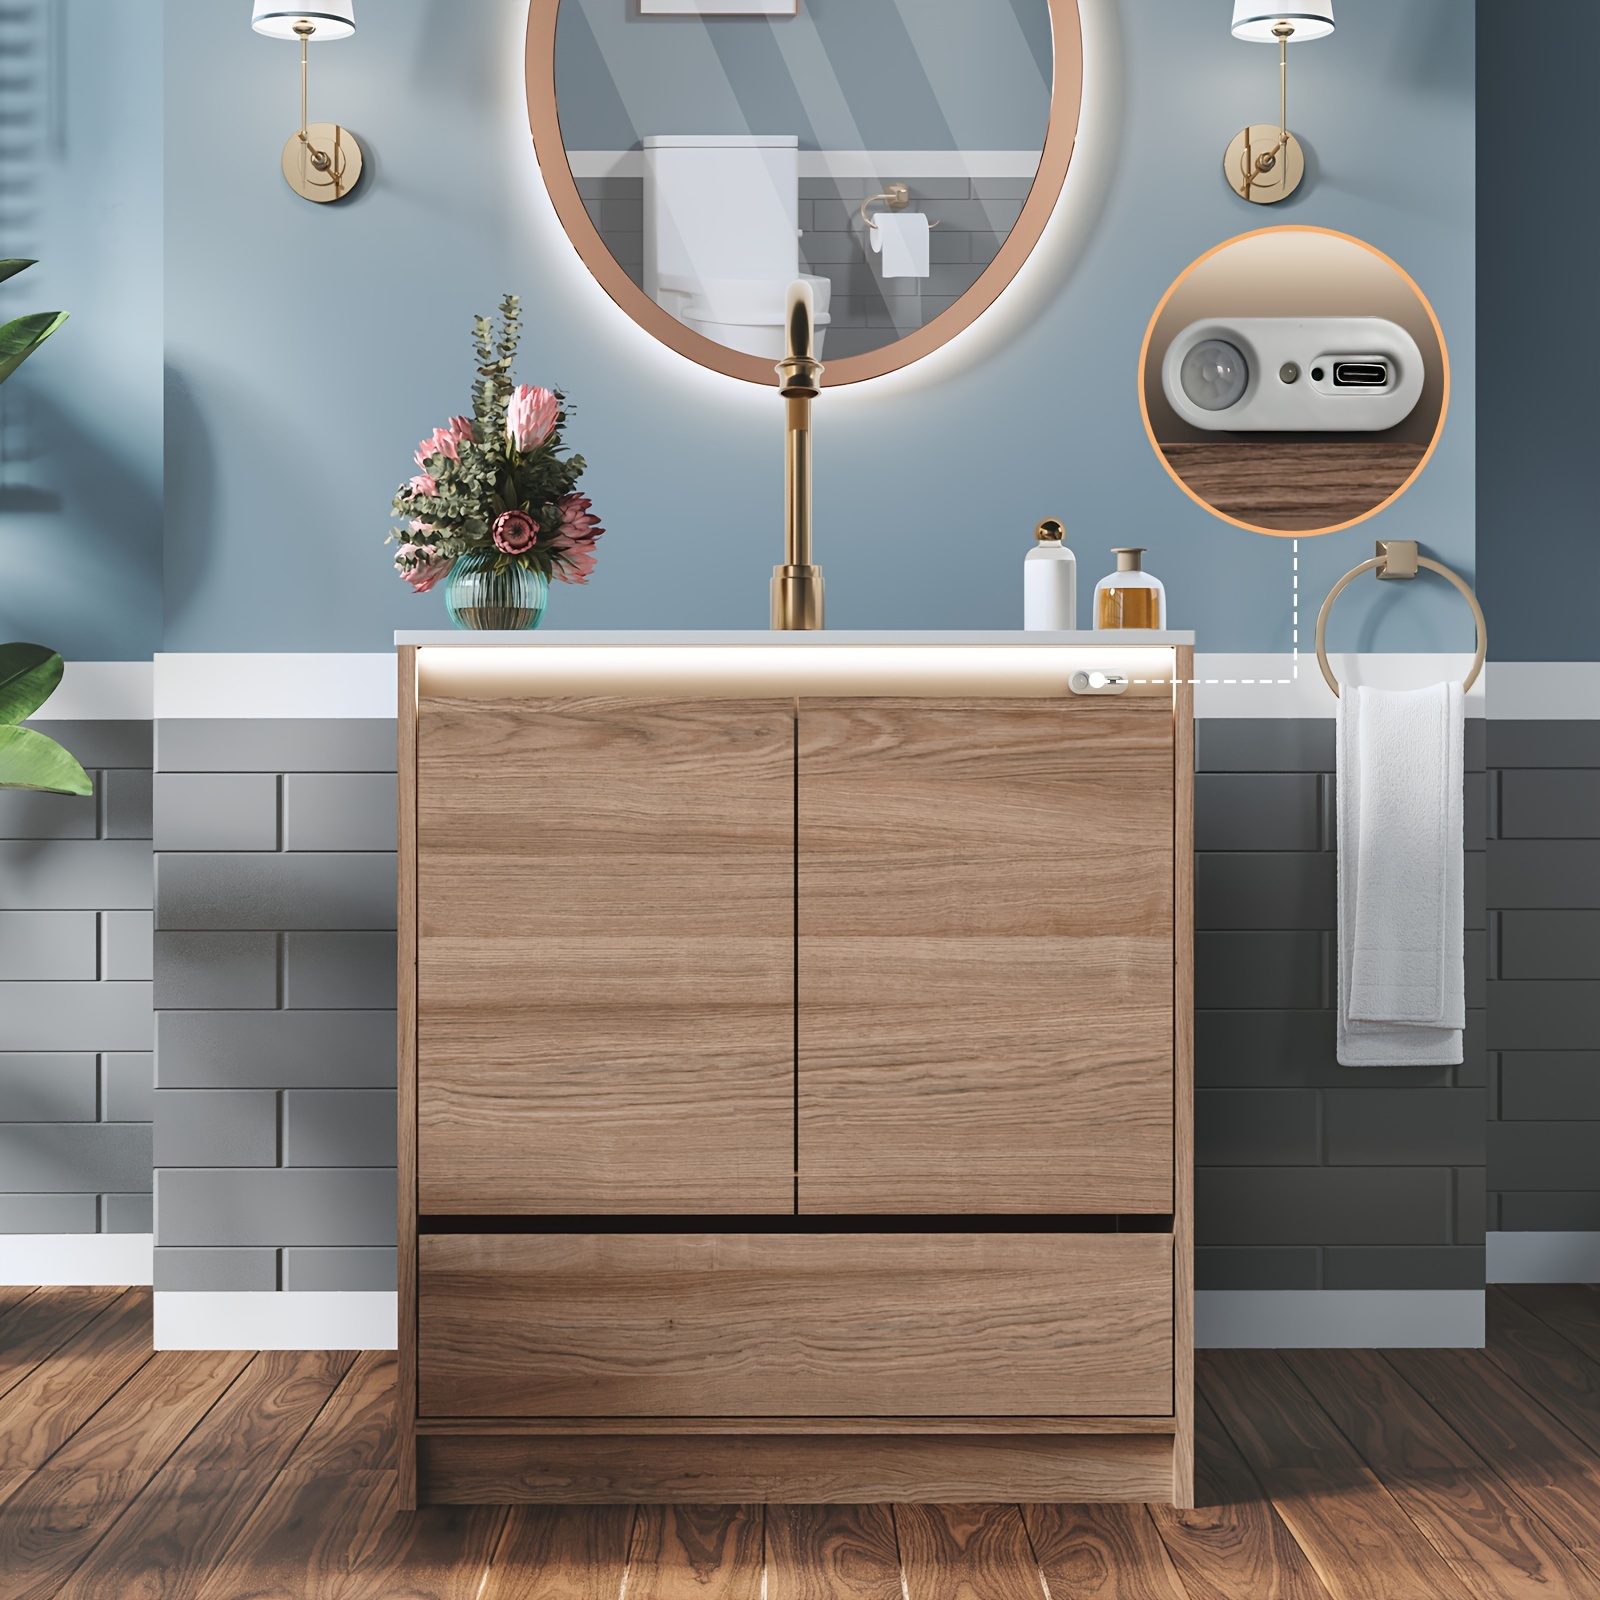 

31" Led Lights Bathroom Vanity With Sink Combo, Motion Sensor Lights Mid-century Modern Small Single Bathroom Cabinet Set, Integrated Sink, Soft Closing Doors & Drawers